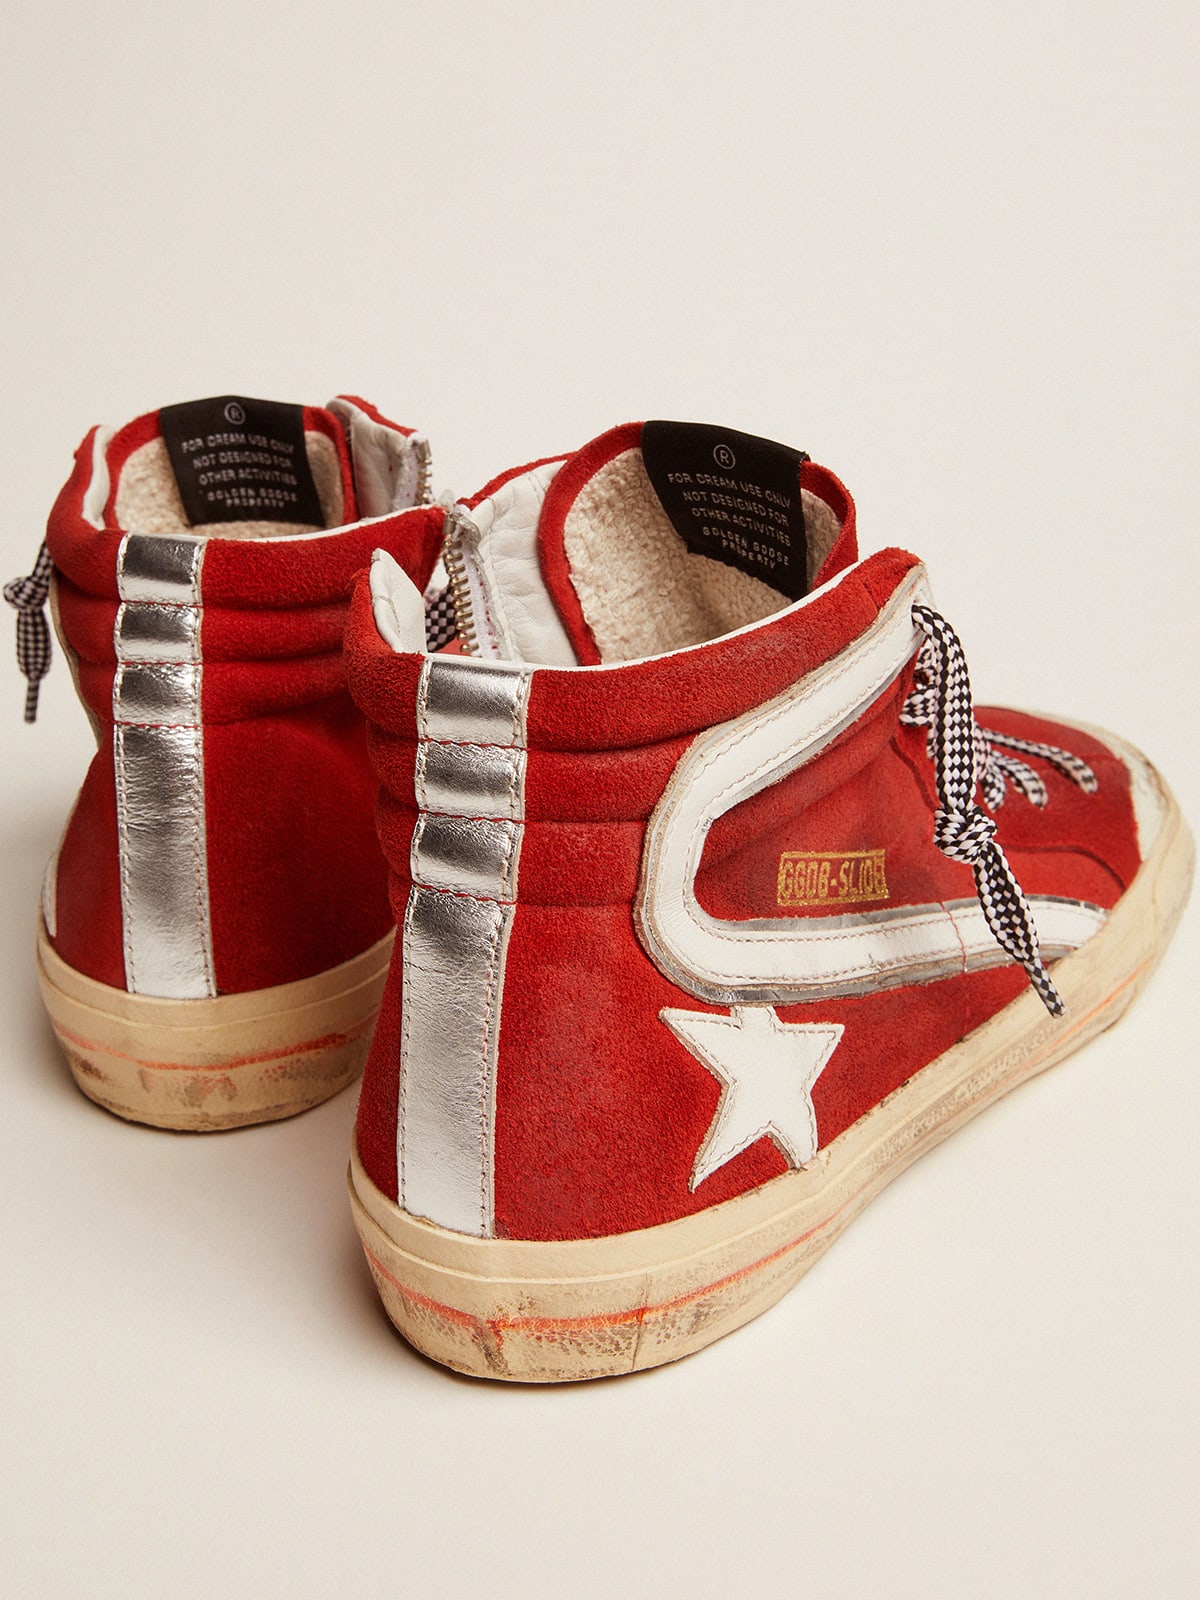 Golden Goose - Sneakers Slide Penstar en daim rouge avec détails blancs in 